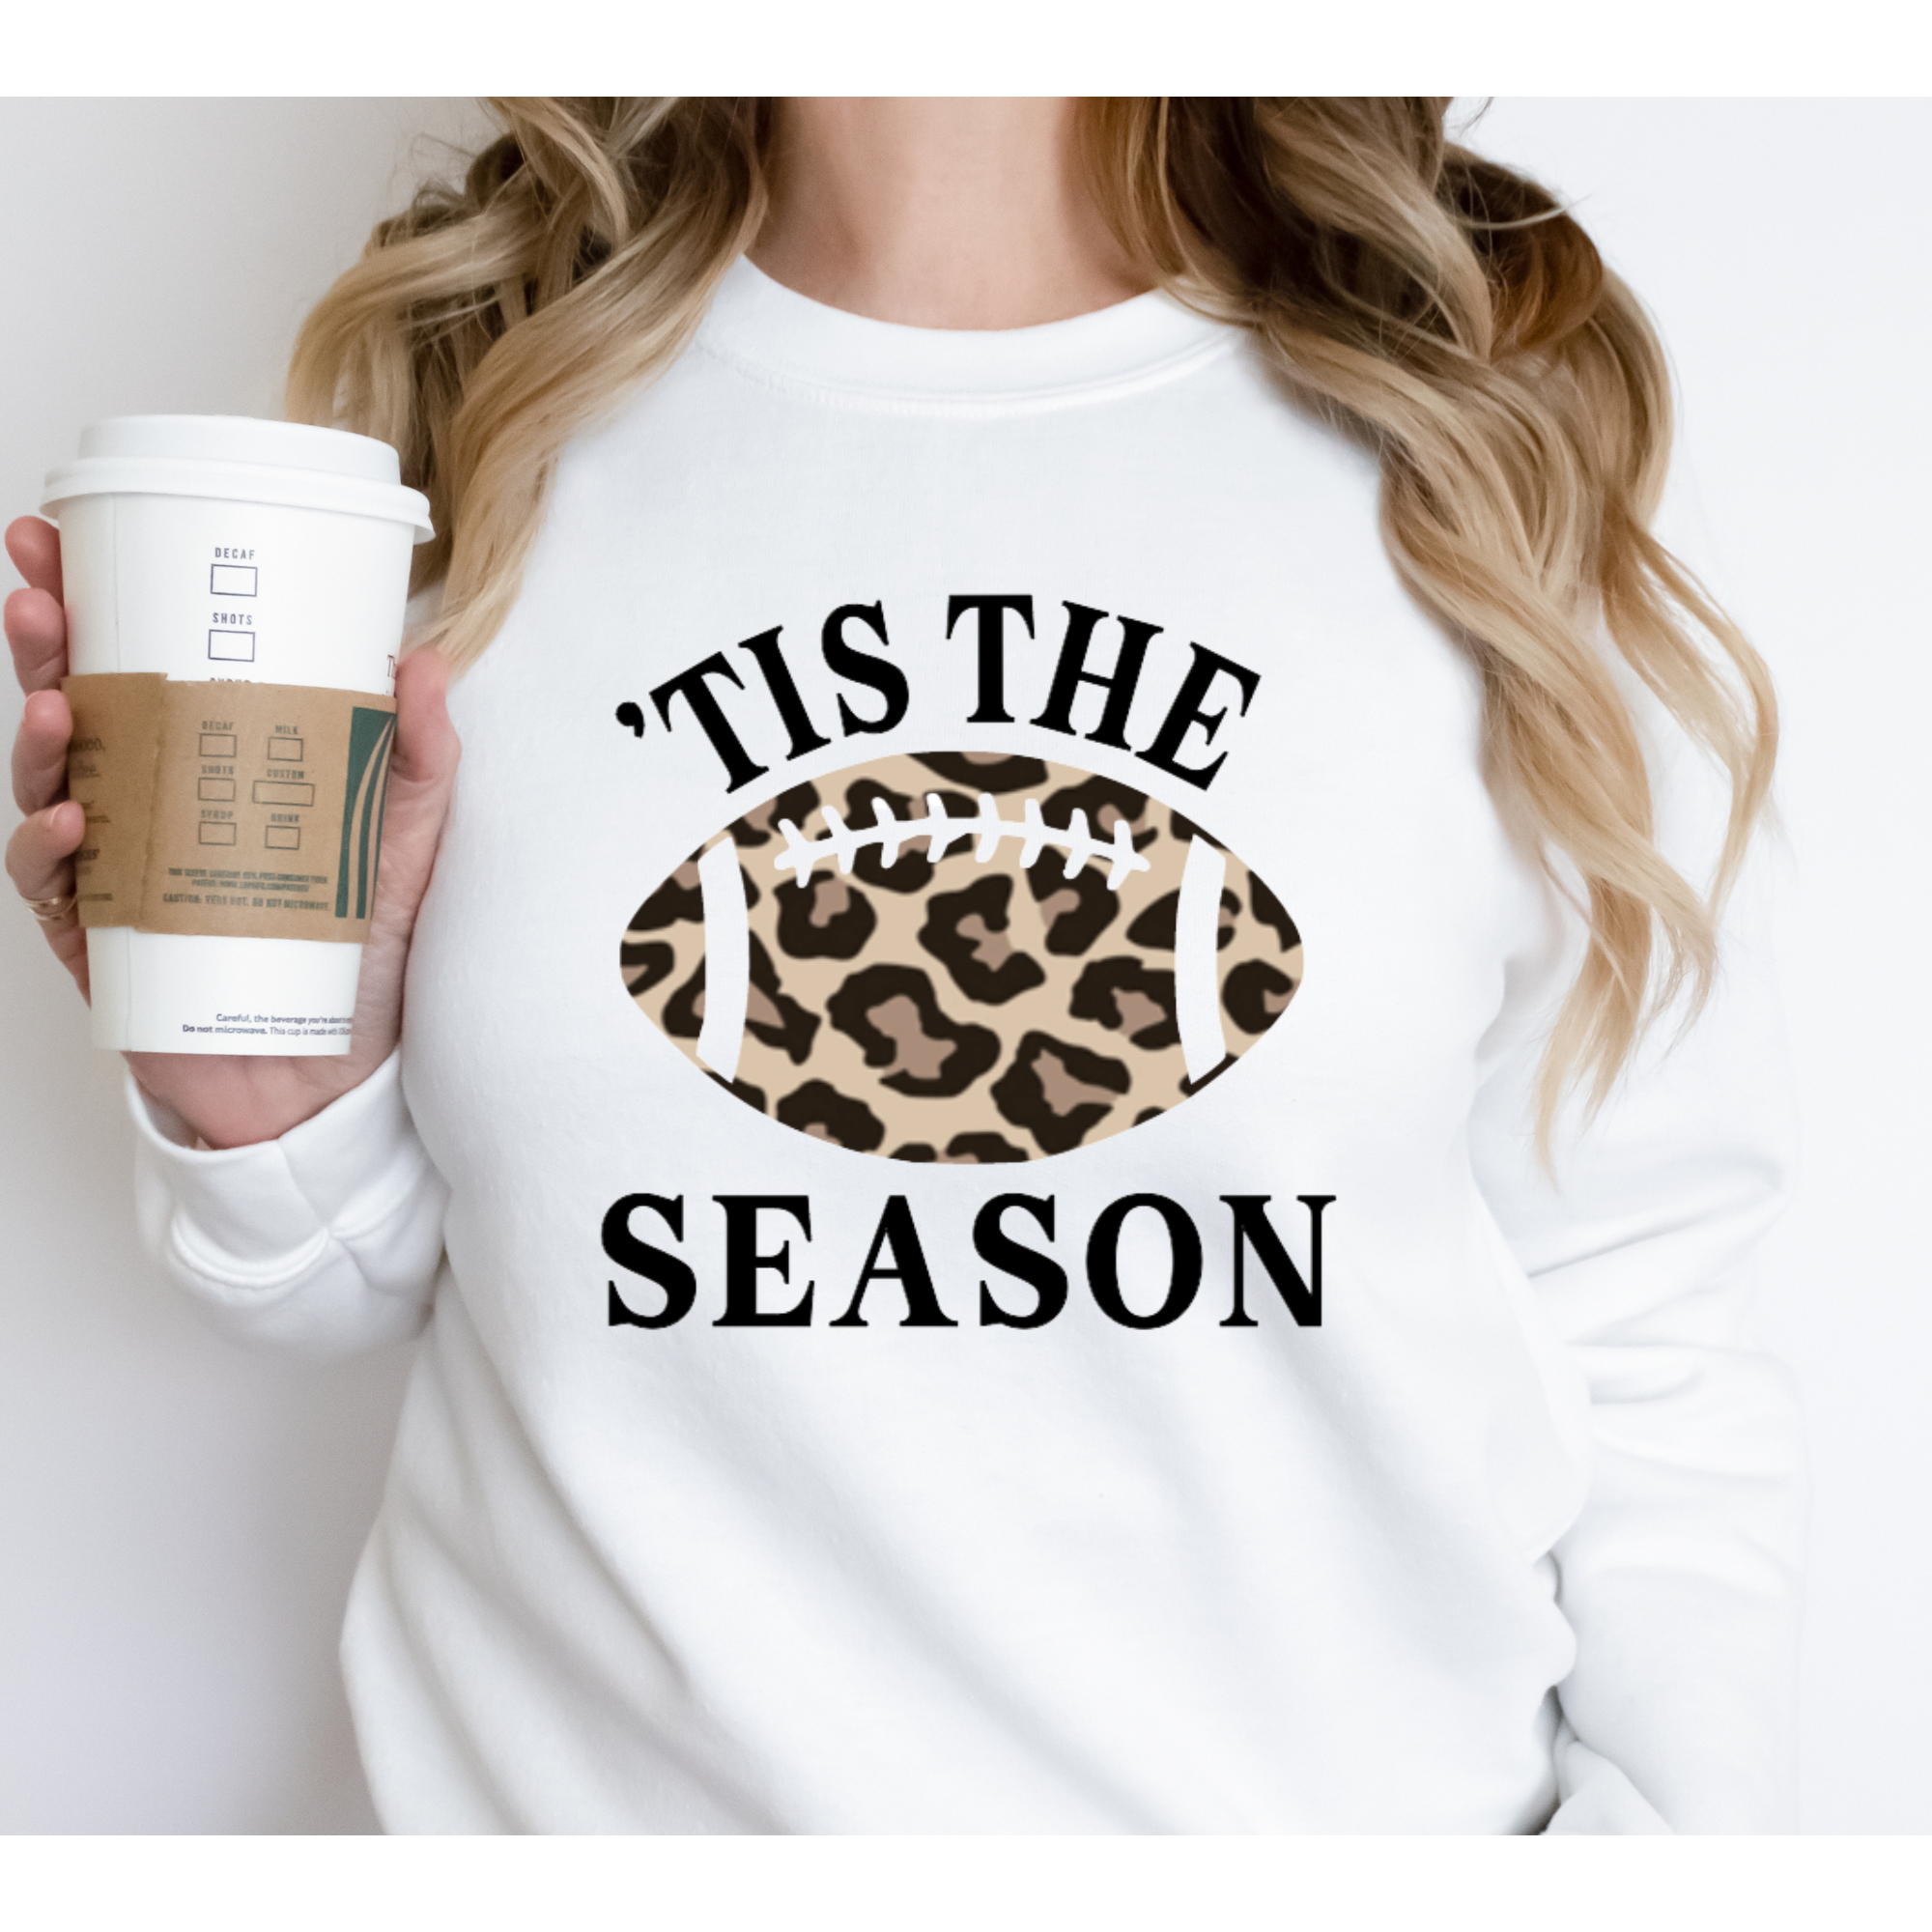 Tis the Season Football Leopard Print Shirt